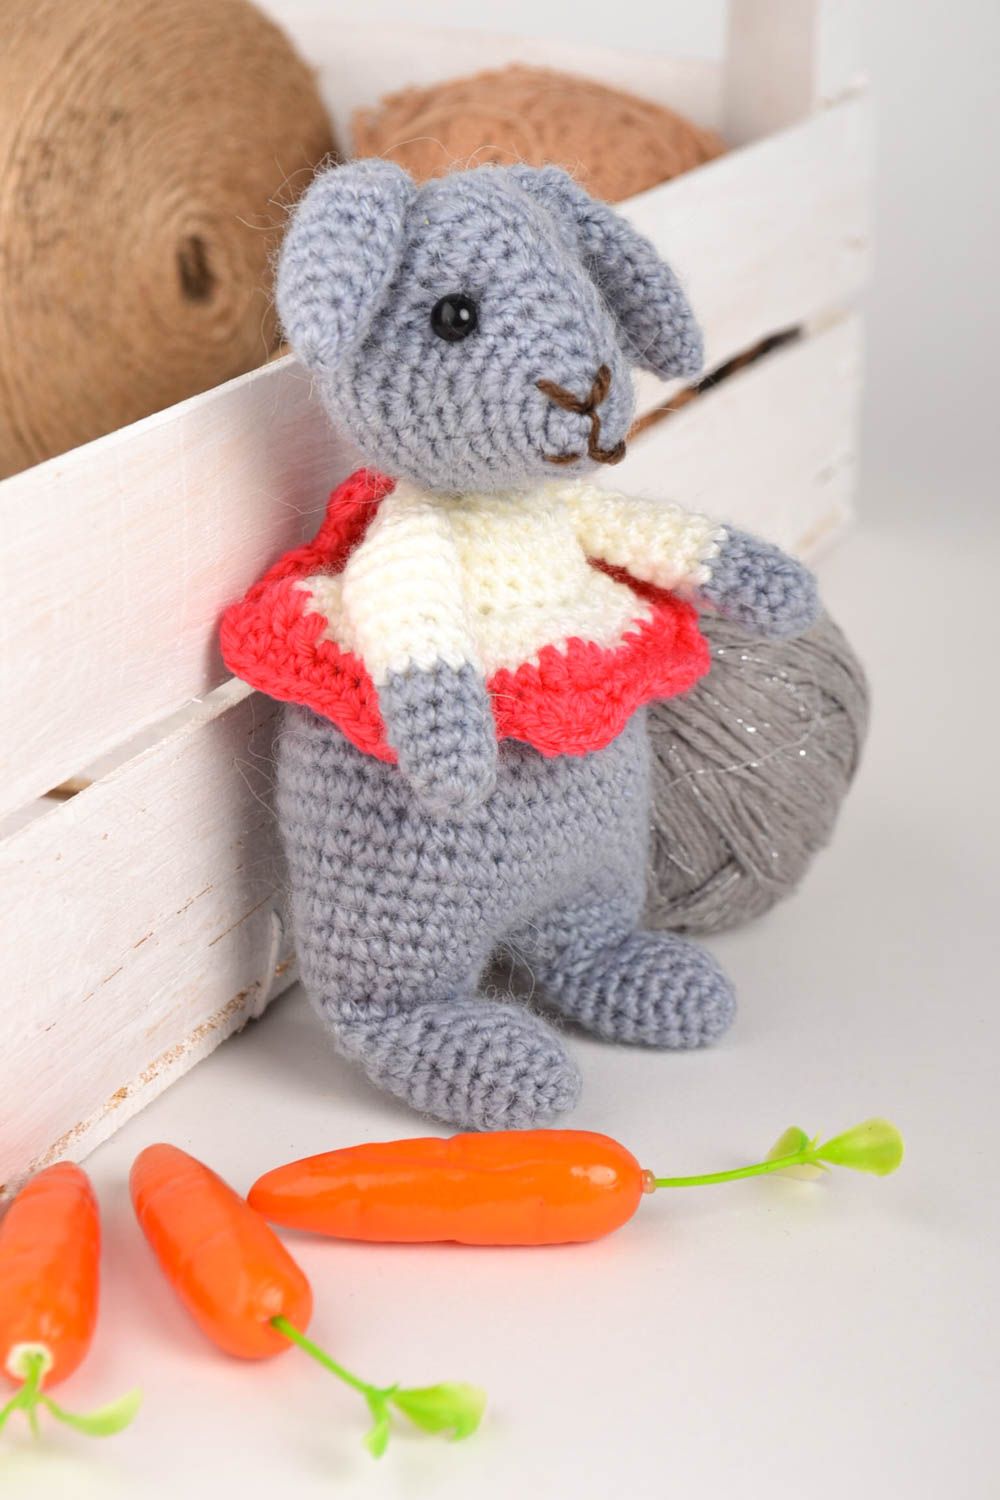 Handmade crochet toy soft toy stuffed animals toys for kids nursery decor photo 1